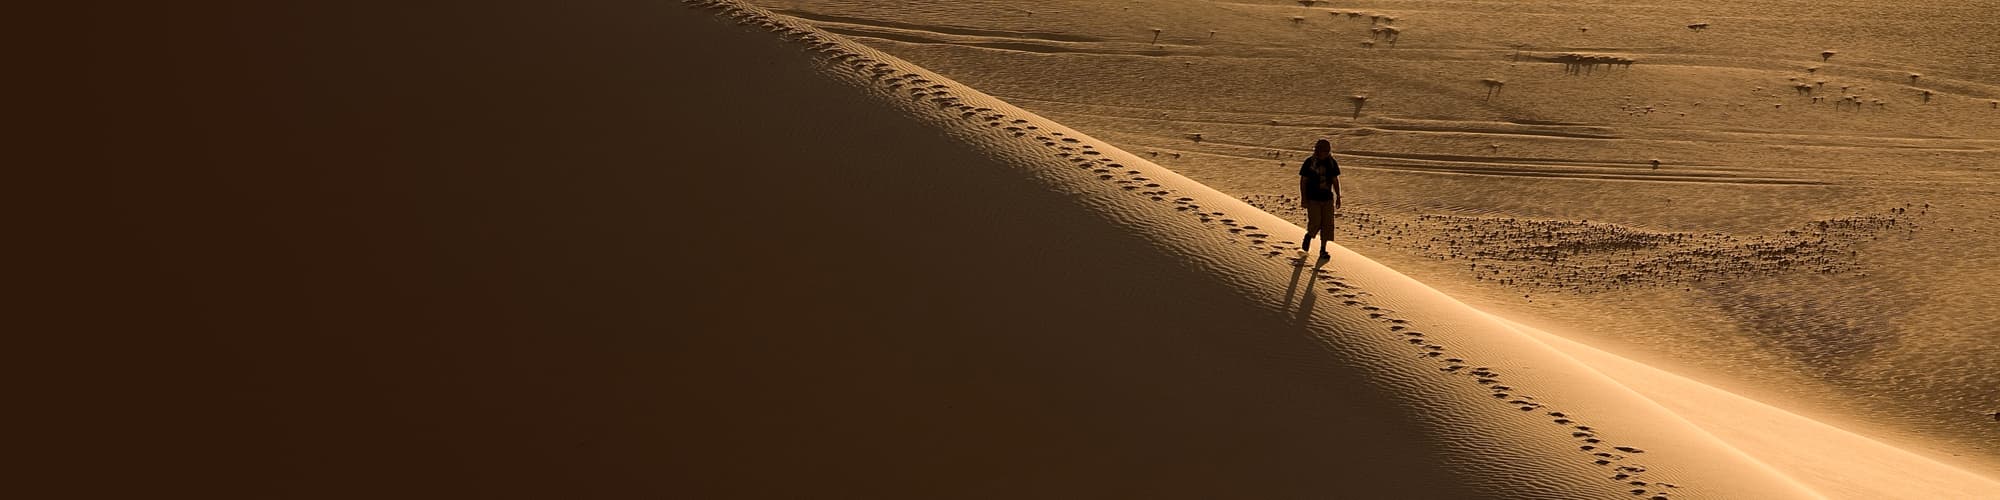 Randonnée Mauritanie © MOIRENC Camille / hemis.fr